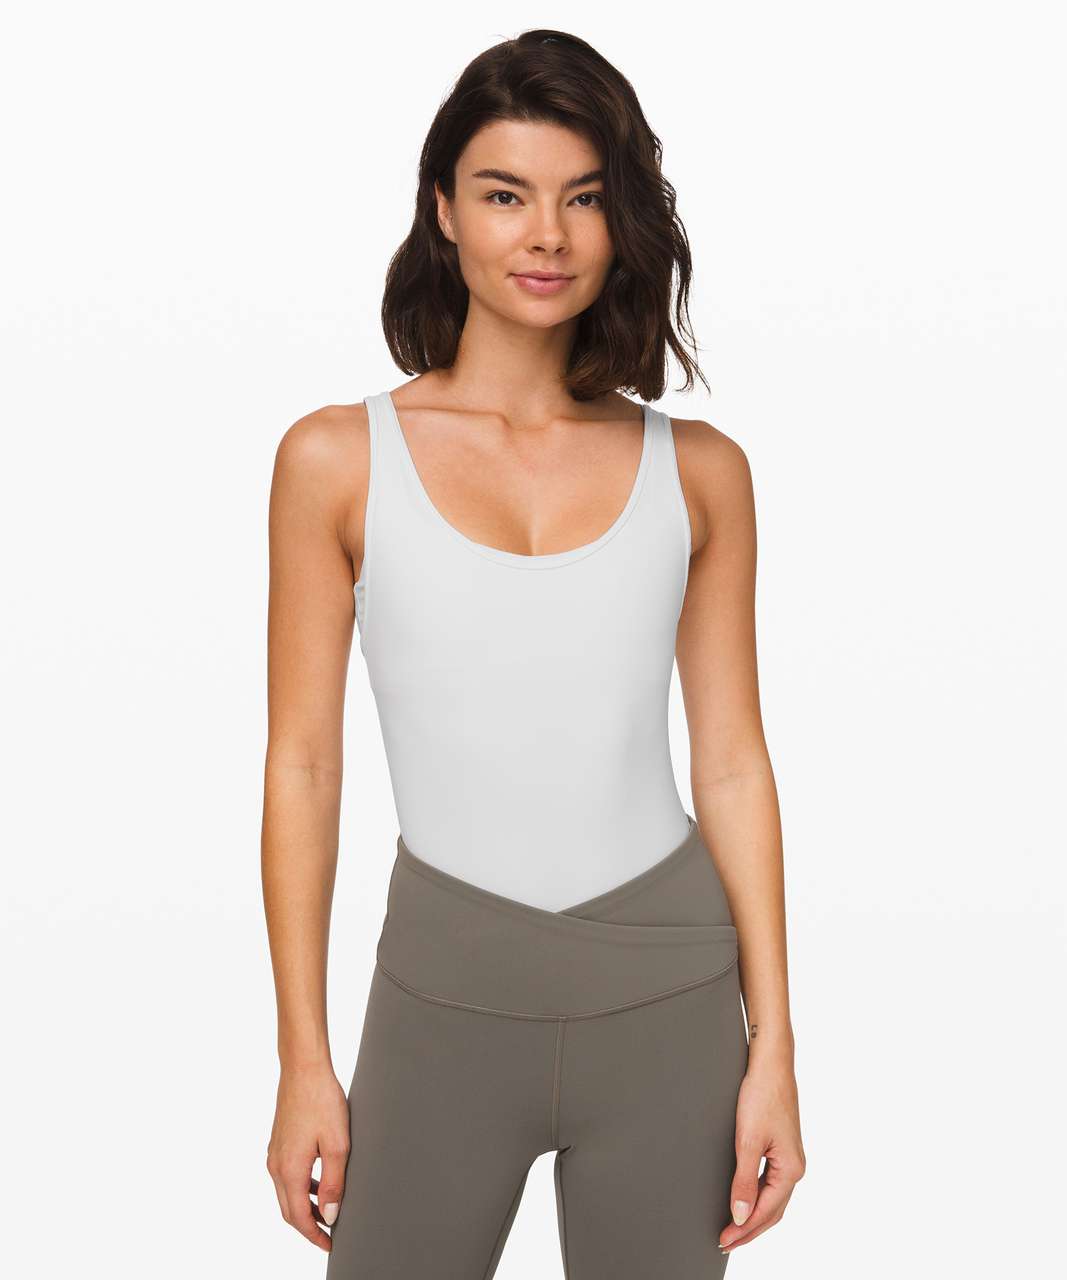 Women's Lululemon Balance and Resist Bodysuit - Grey and White